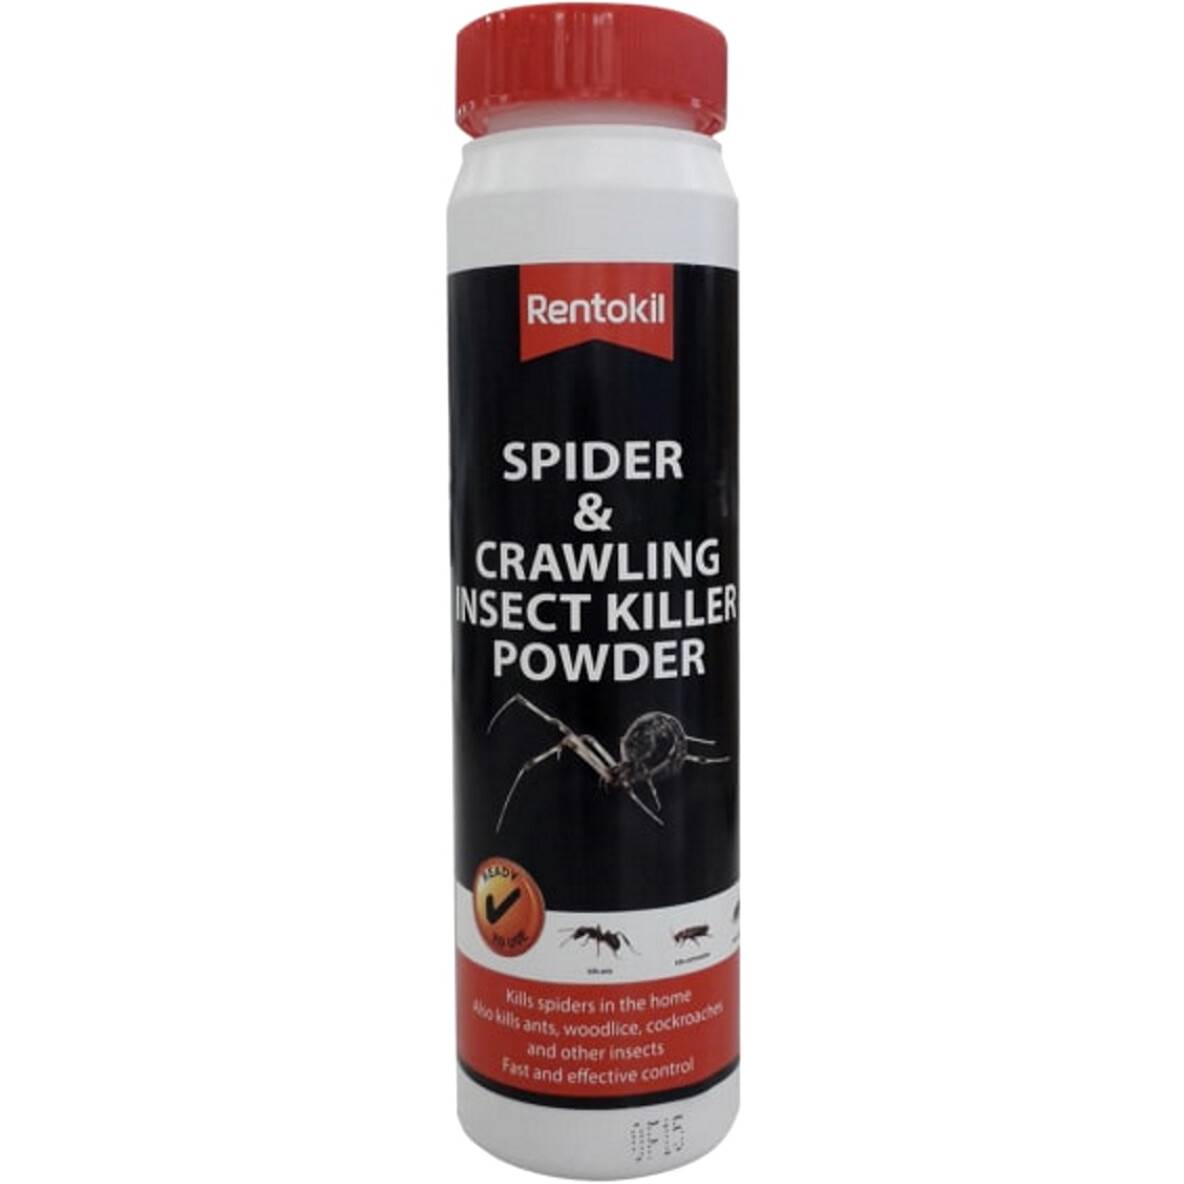 Rentokil Spider & Crawling Insect Powder - 150g